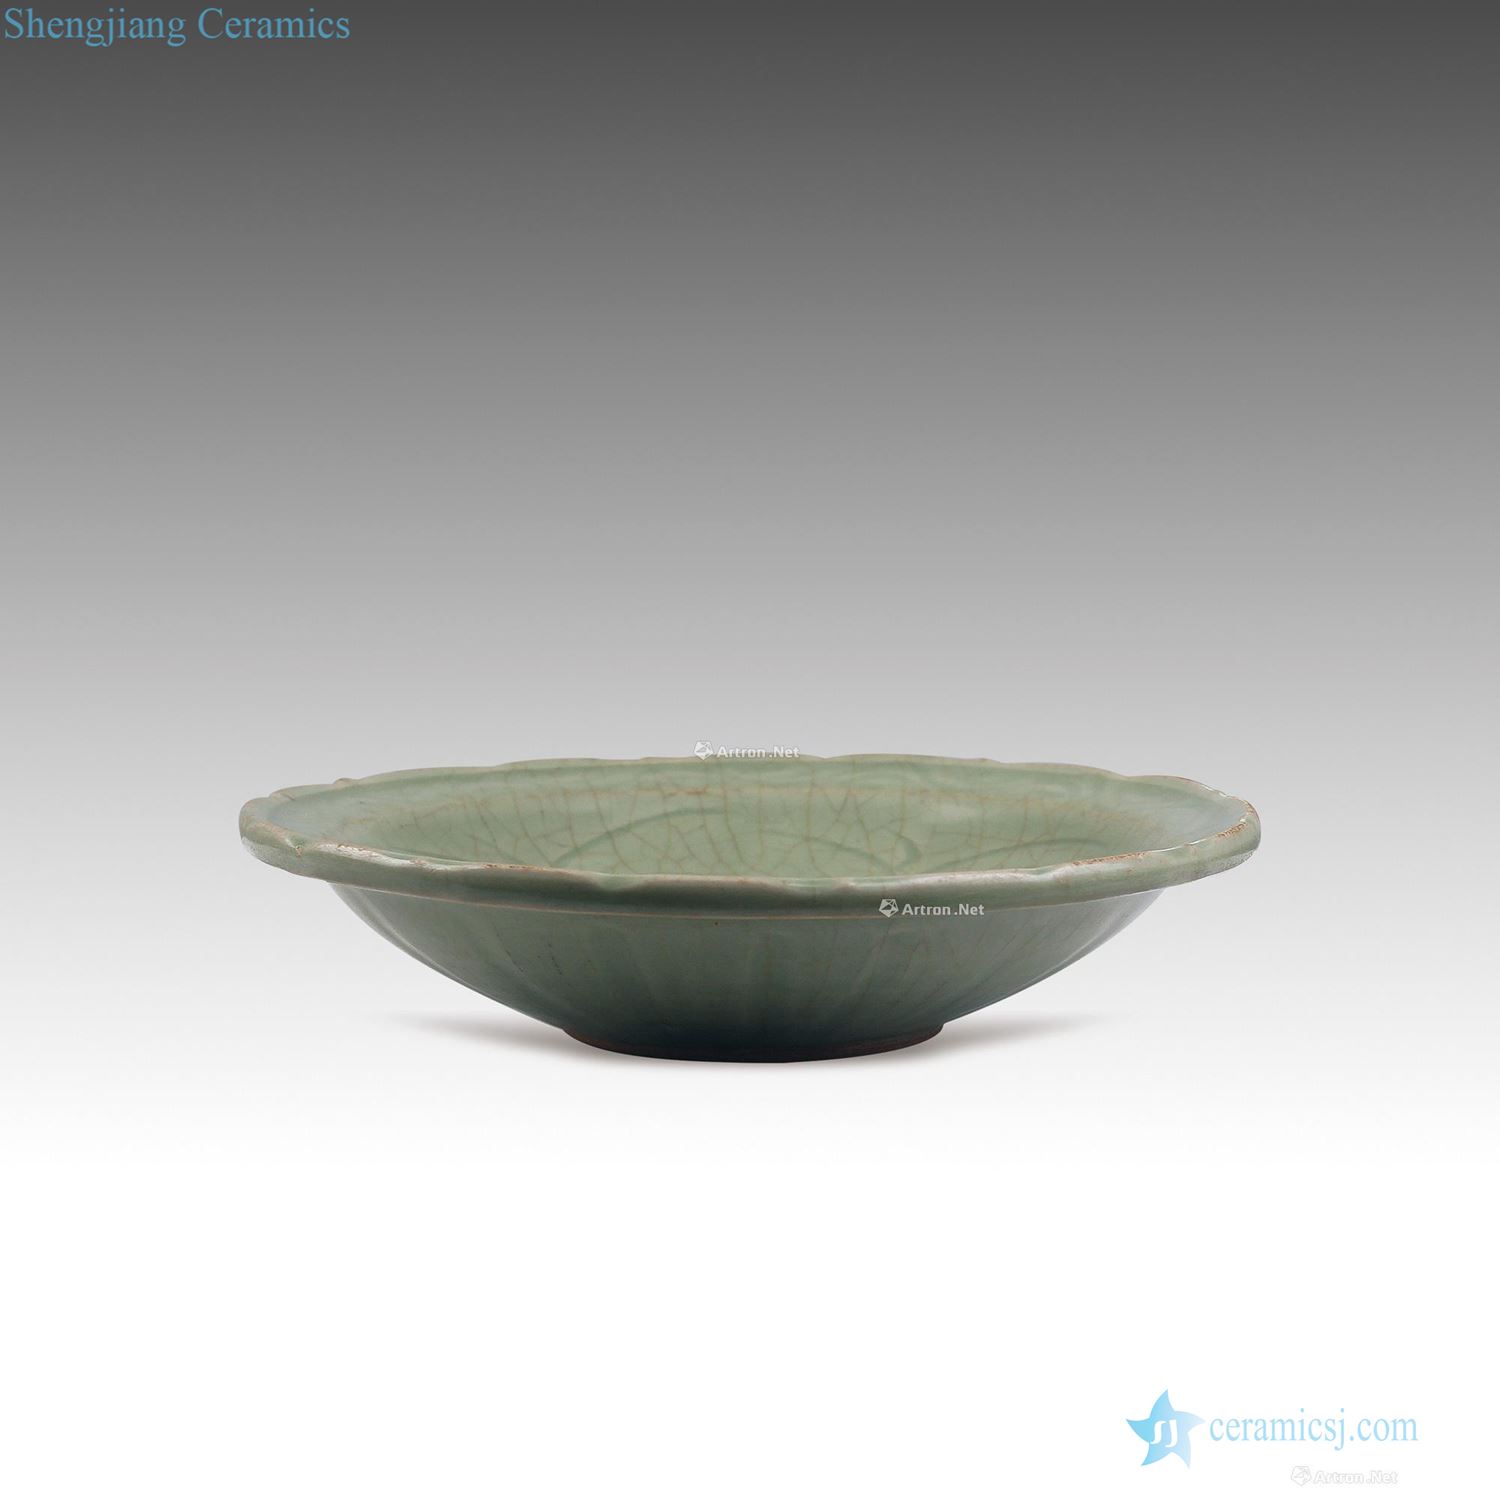 The yuan dynasty Longquan celadon hand-cut plate